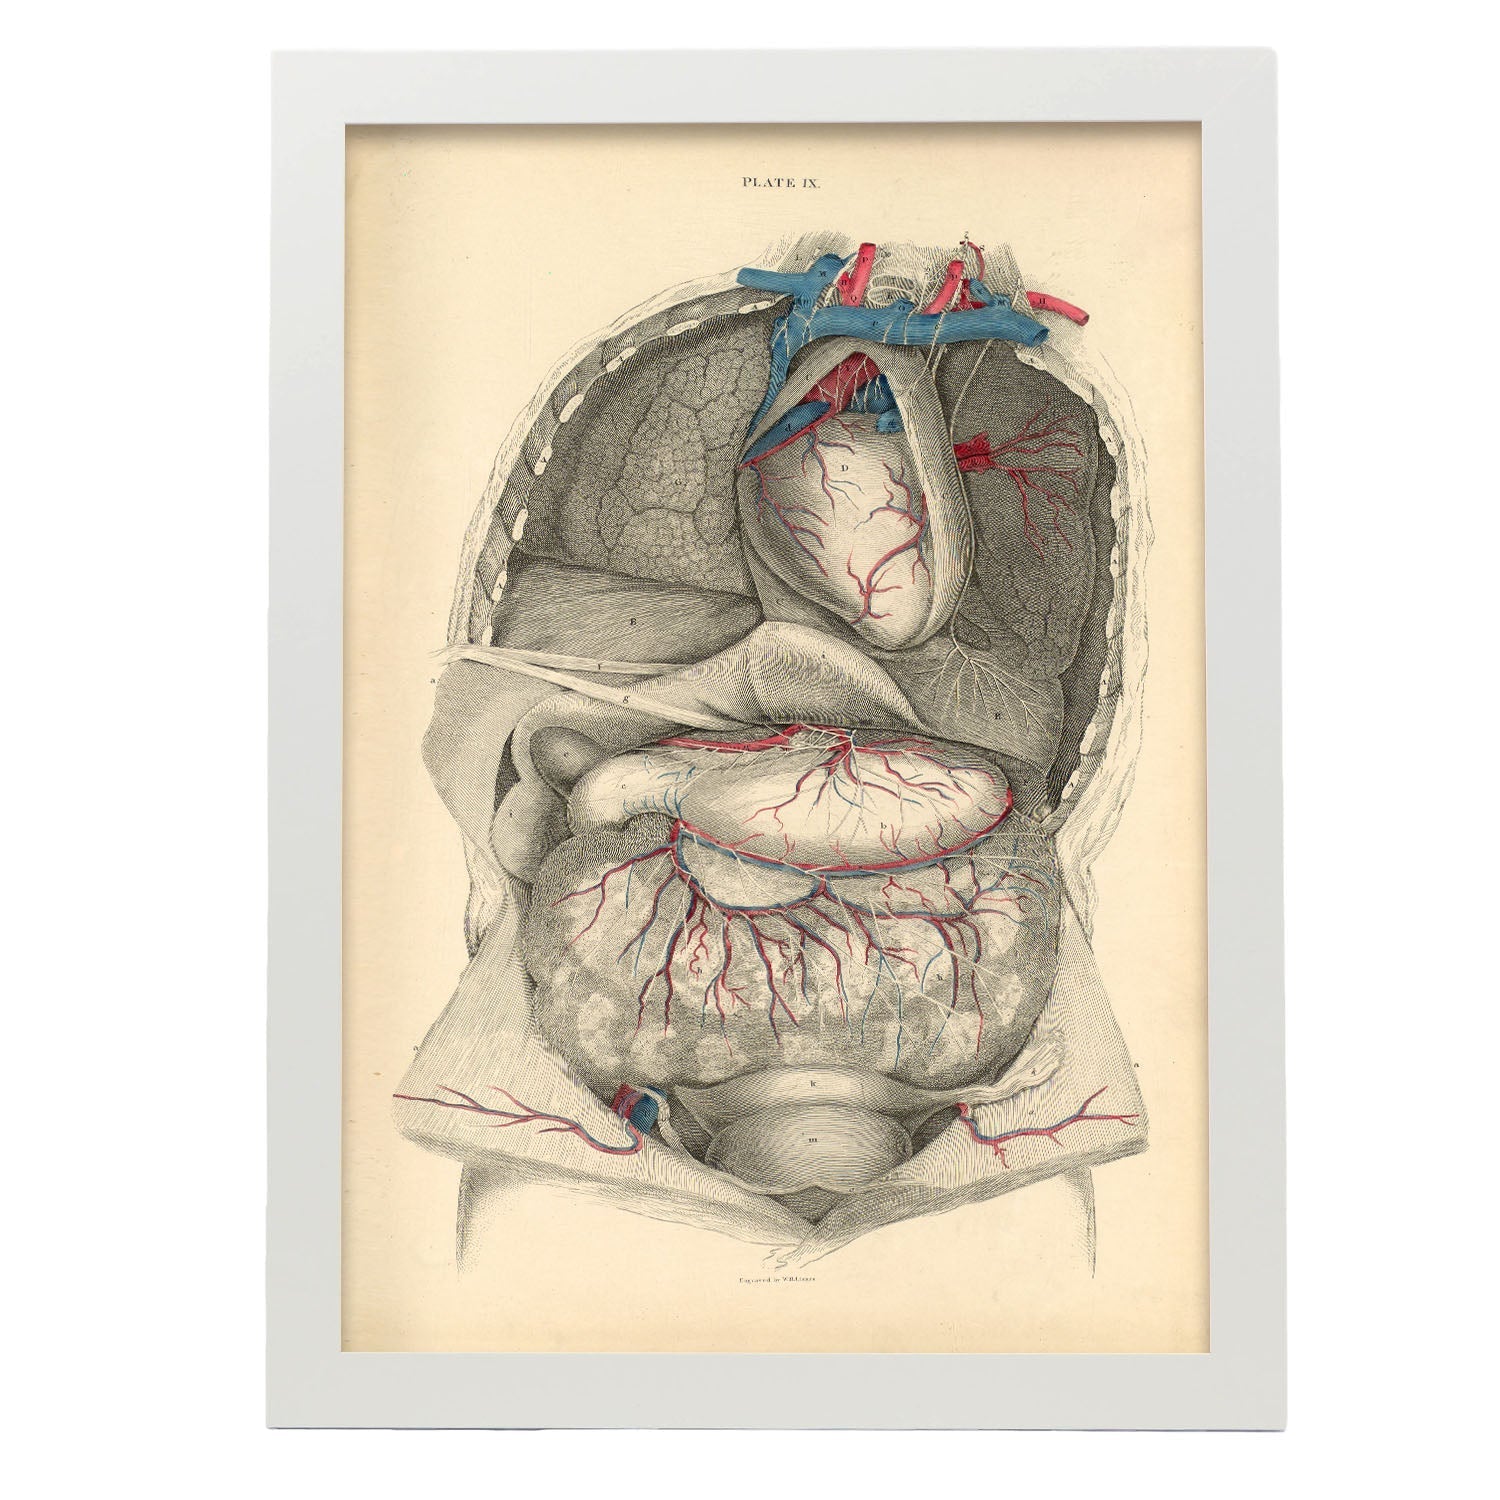 Dissection of the thorax and abdomen-Artwork-Nacnic-A3-Marco Blanco-Nacnic Estudio SL